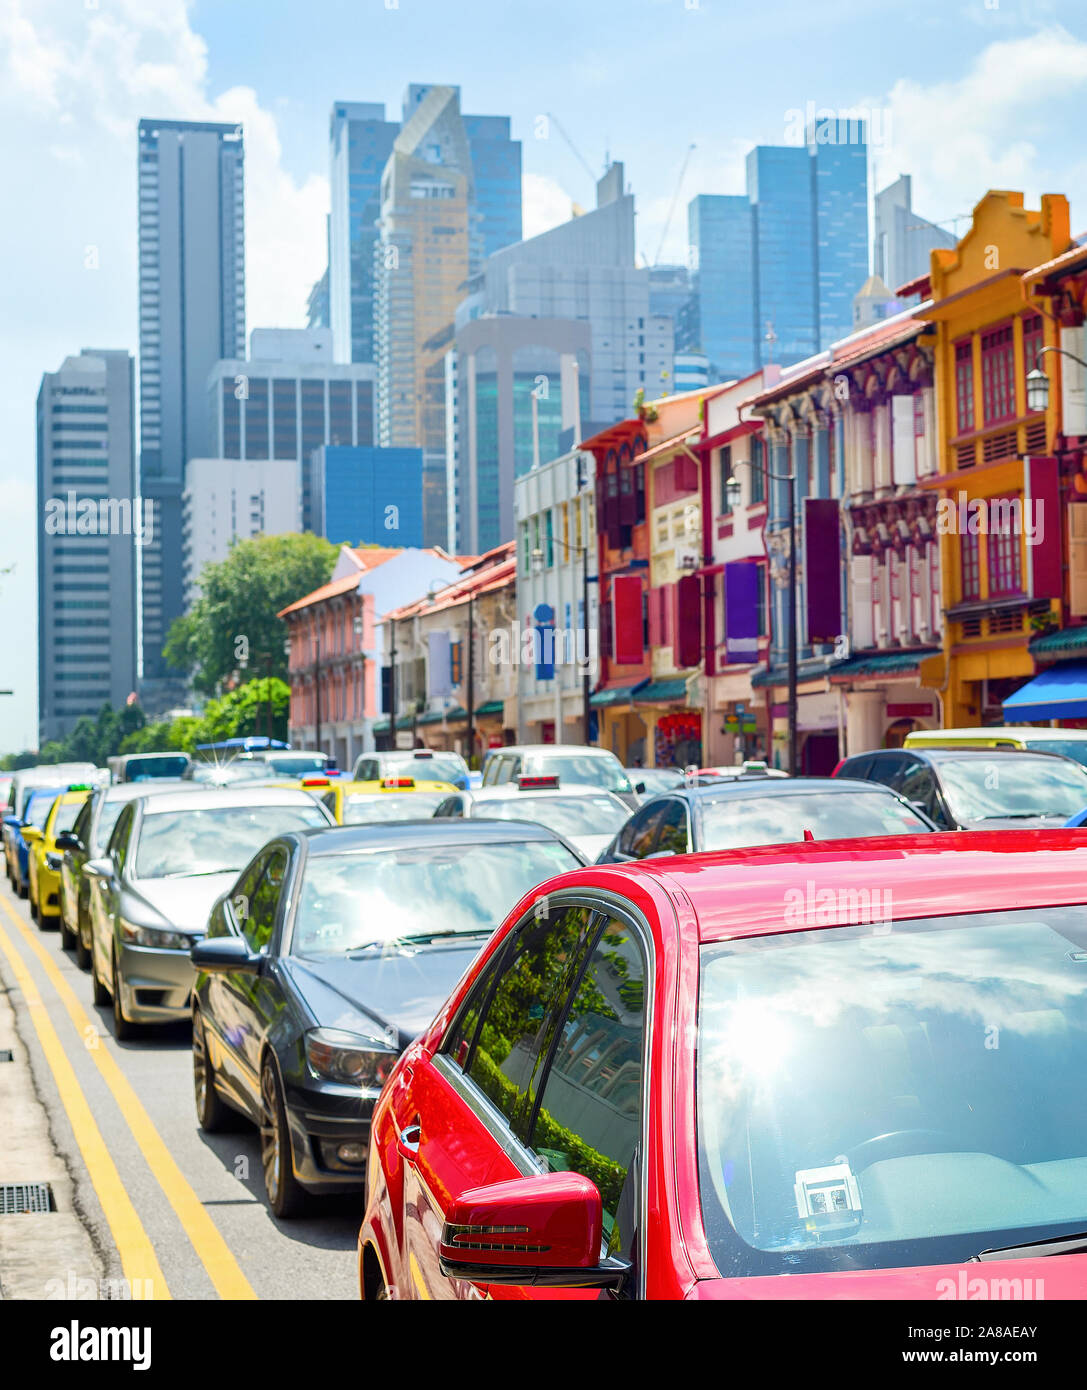 Car traffic, colorful shophouses along street by Neil Road, Singapore modern metropolis skyline Stock Photo